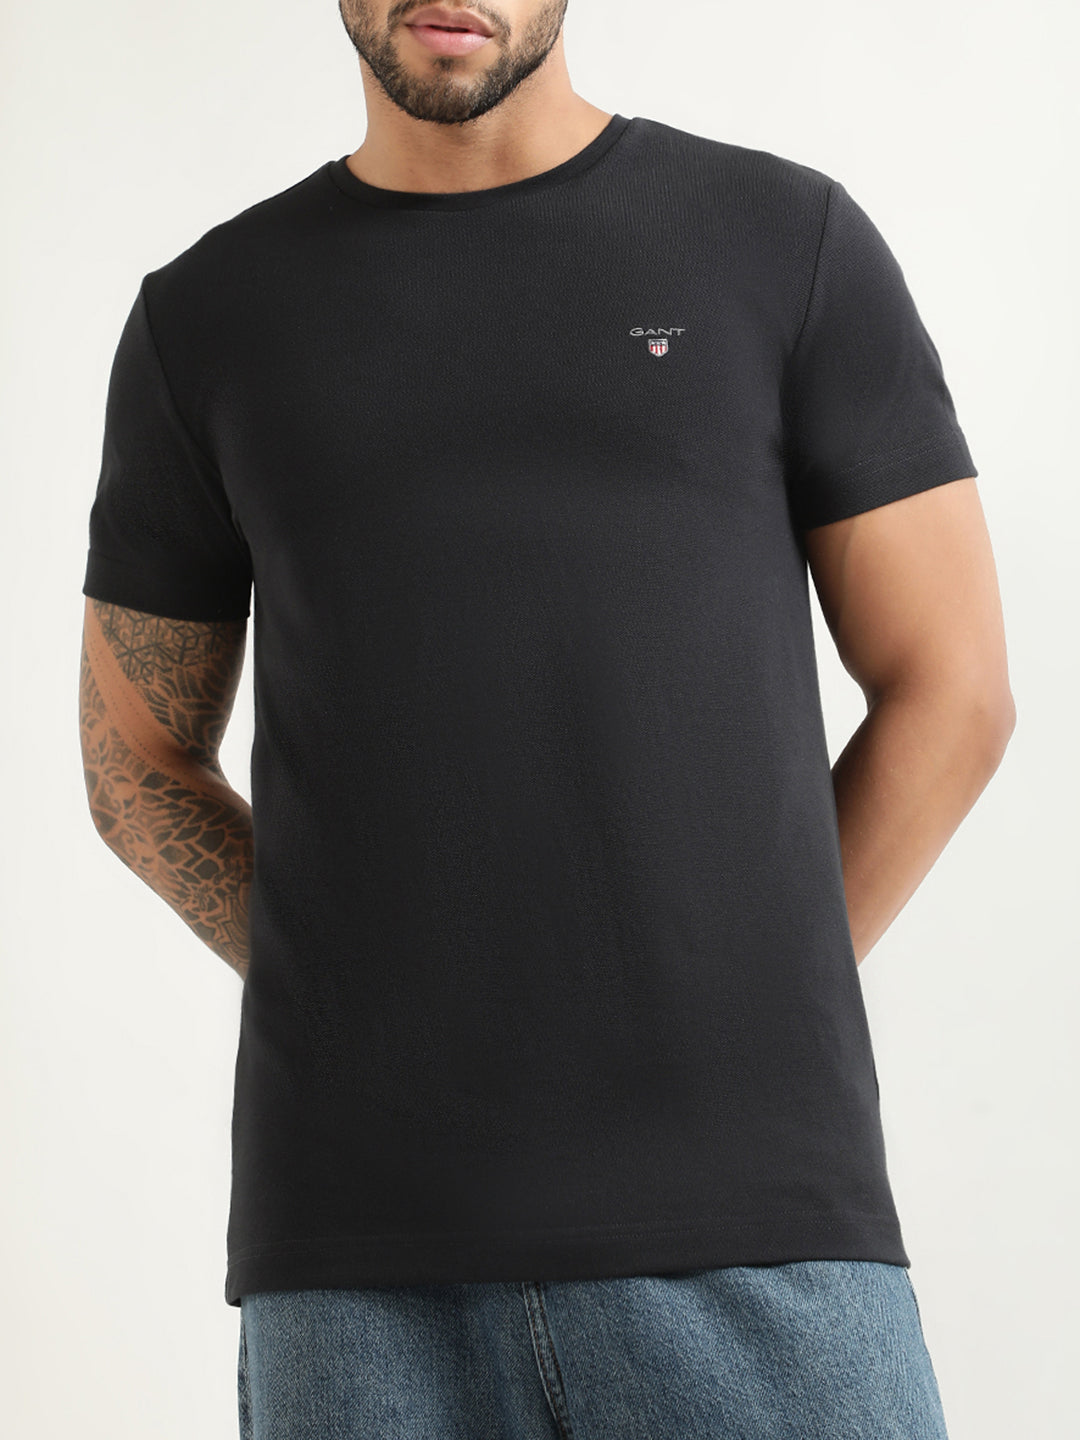 Gant Black Slim Fit T-Shirt